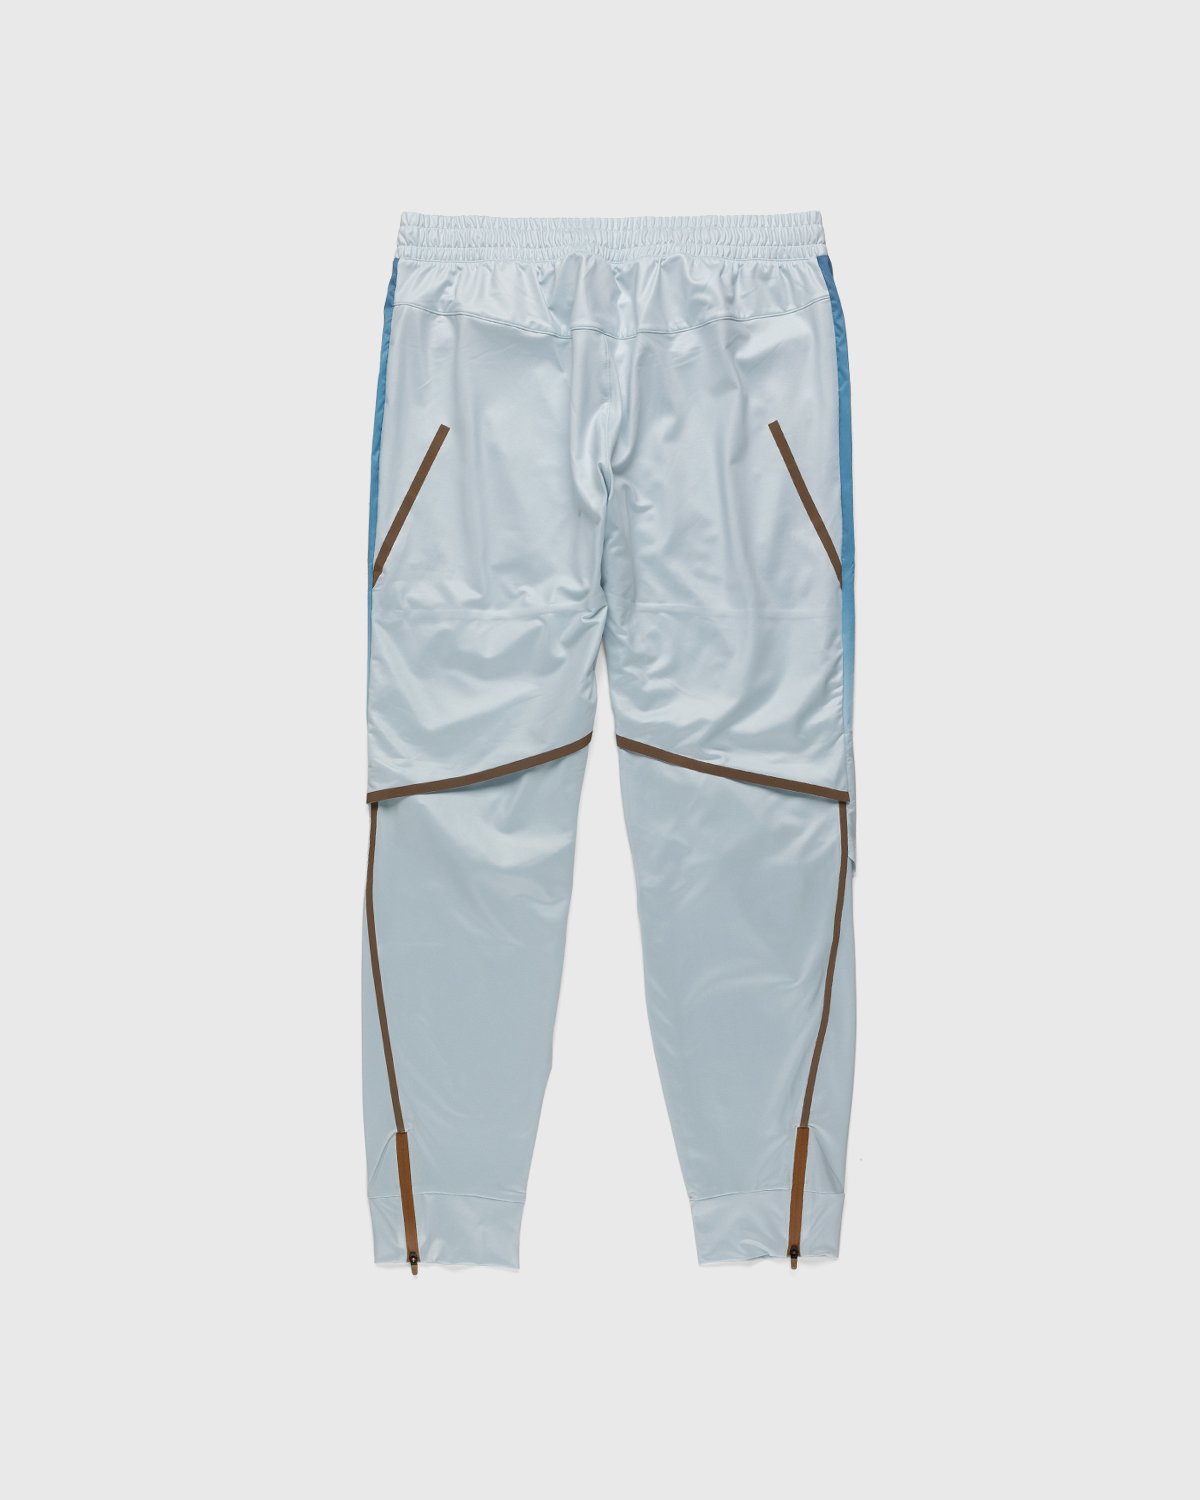 Loewe x On - Men's Technical Running Pants Gradient Grey - Clothing - Blue - Image 2